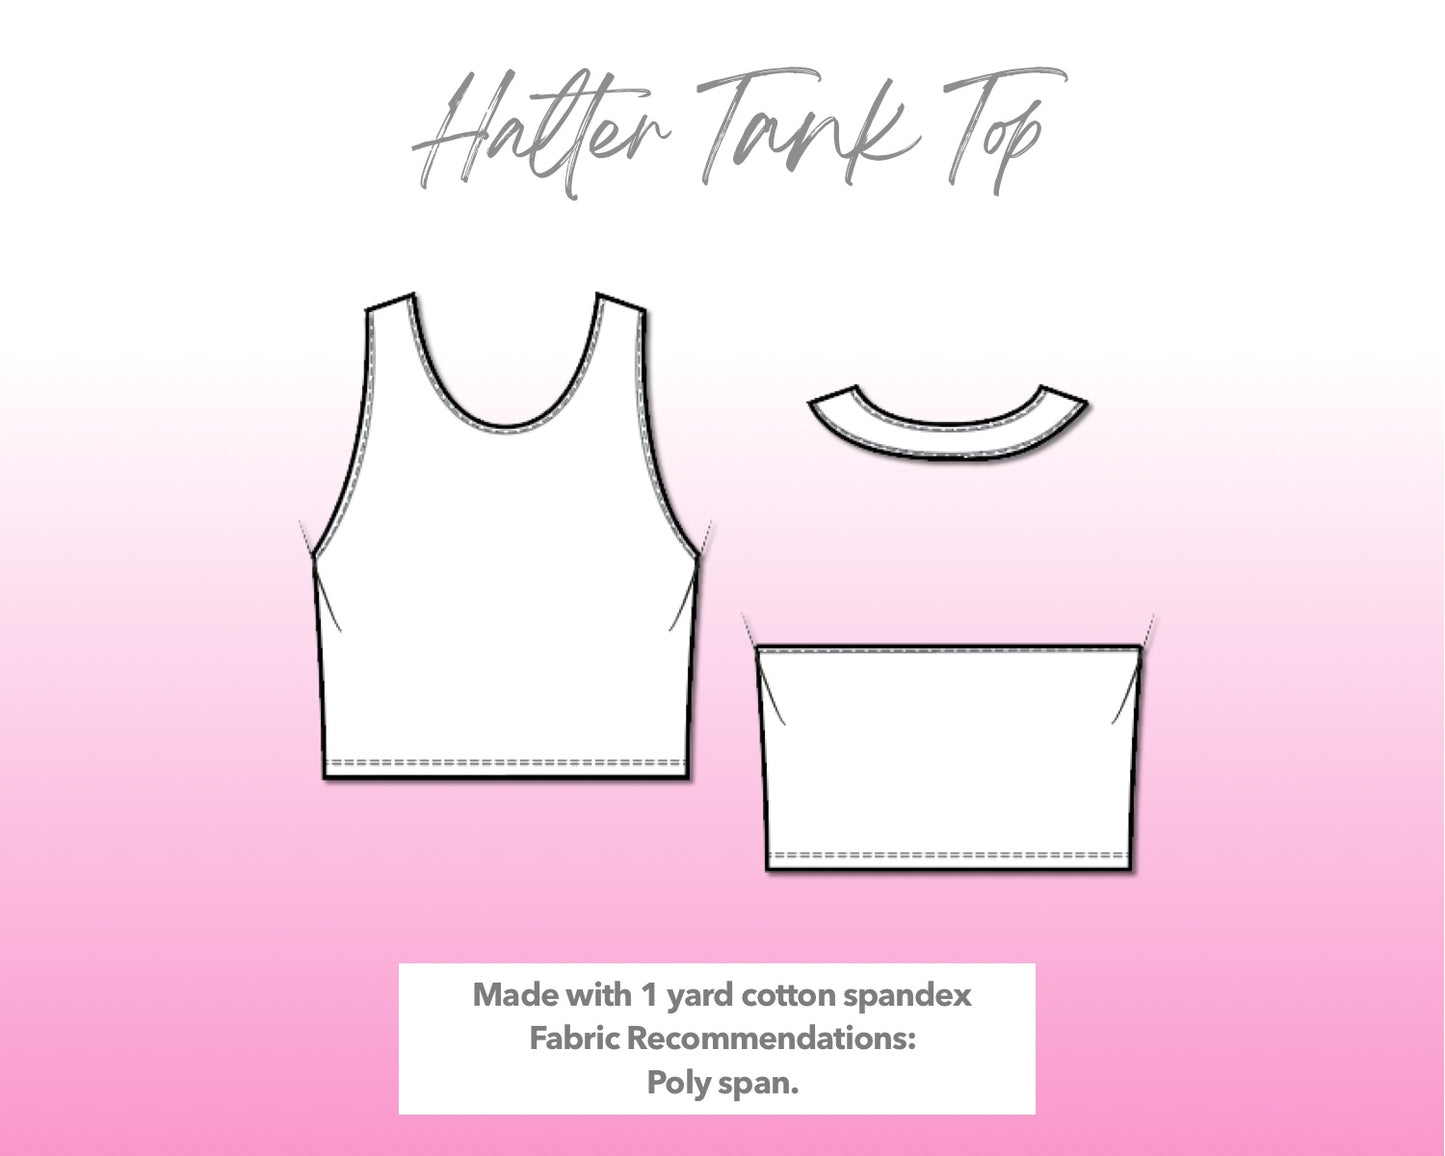 Illustration and detailed description for Halter Knit Tank sewing pattern.